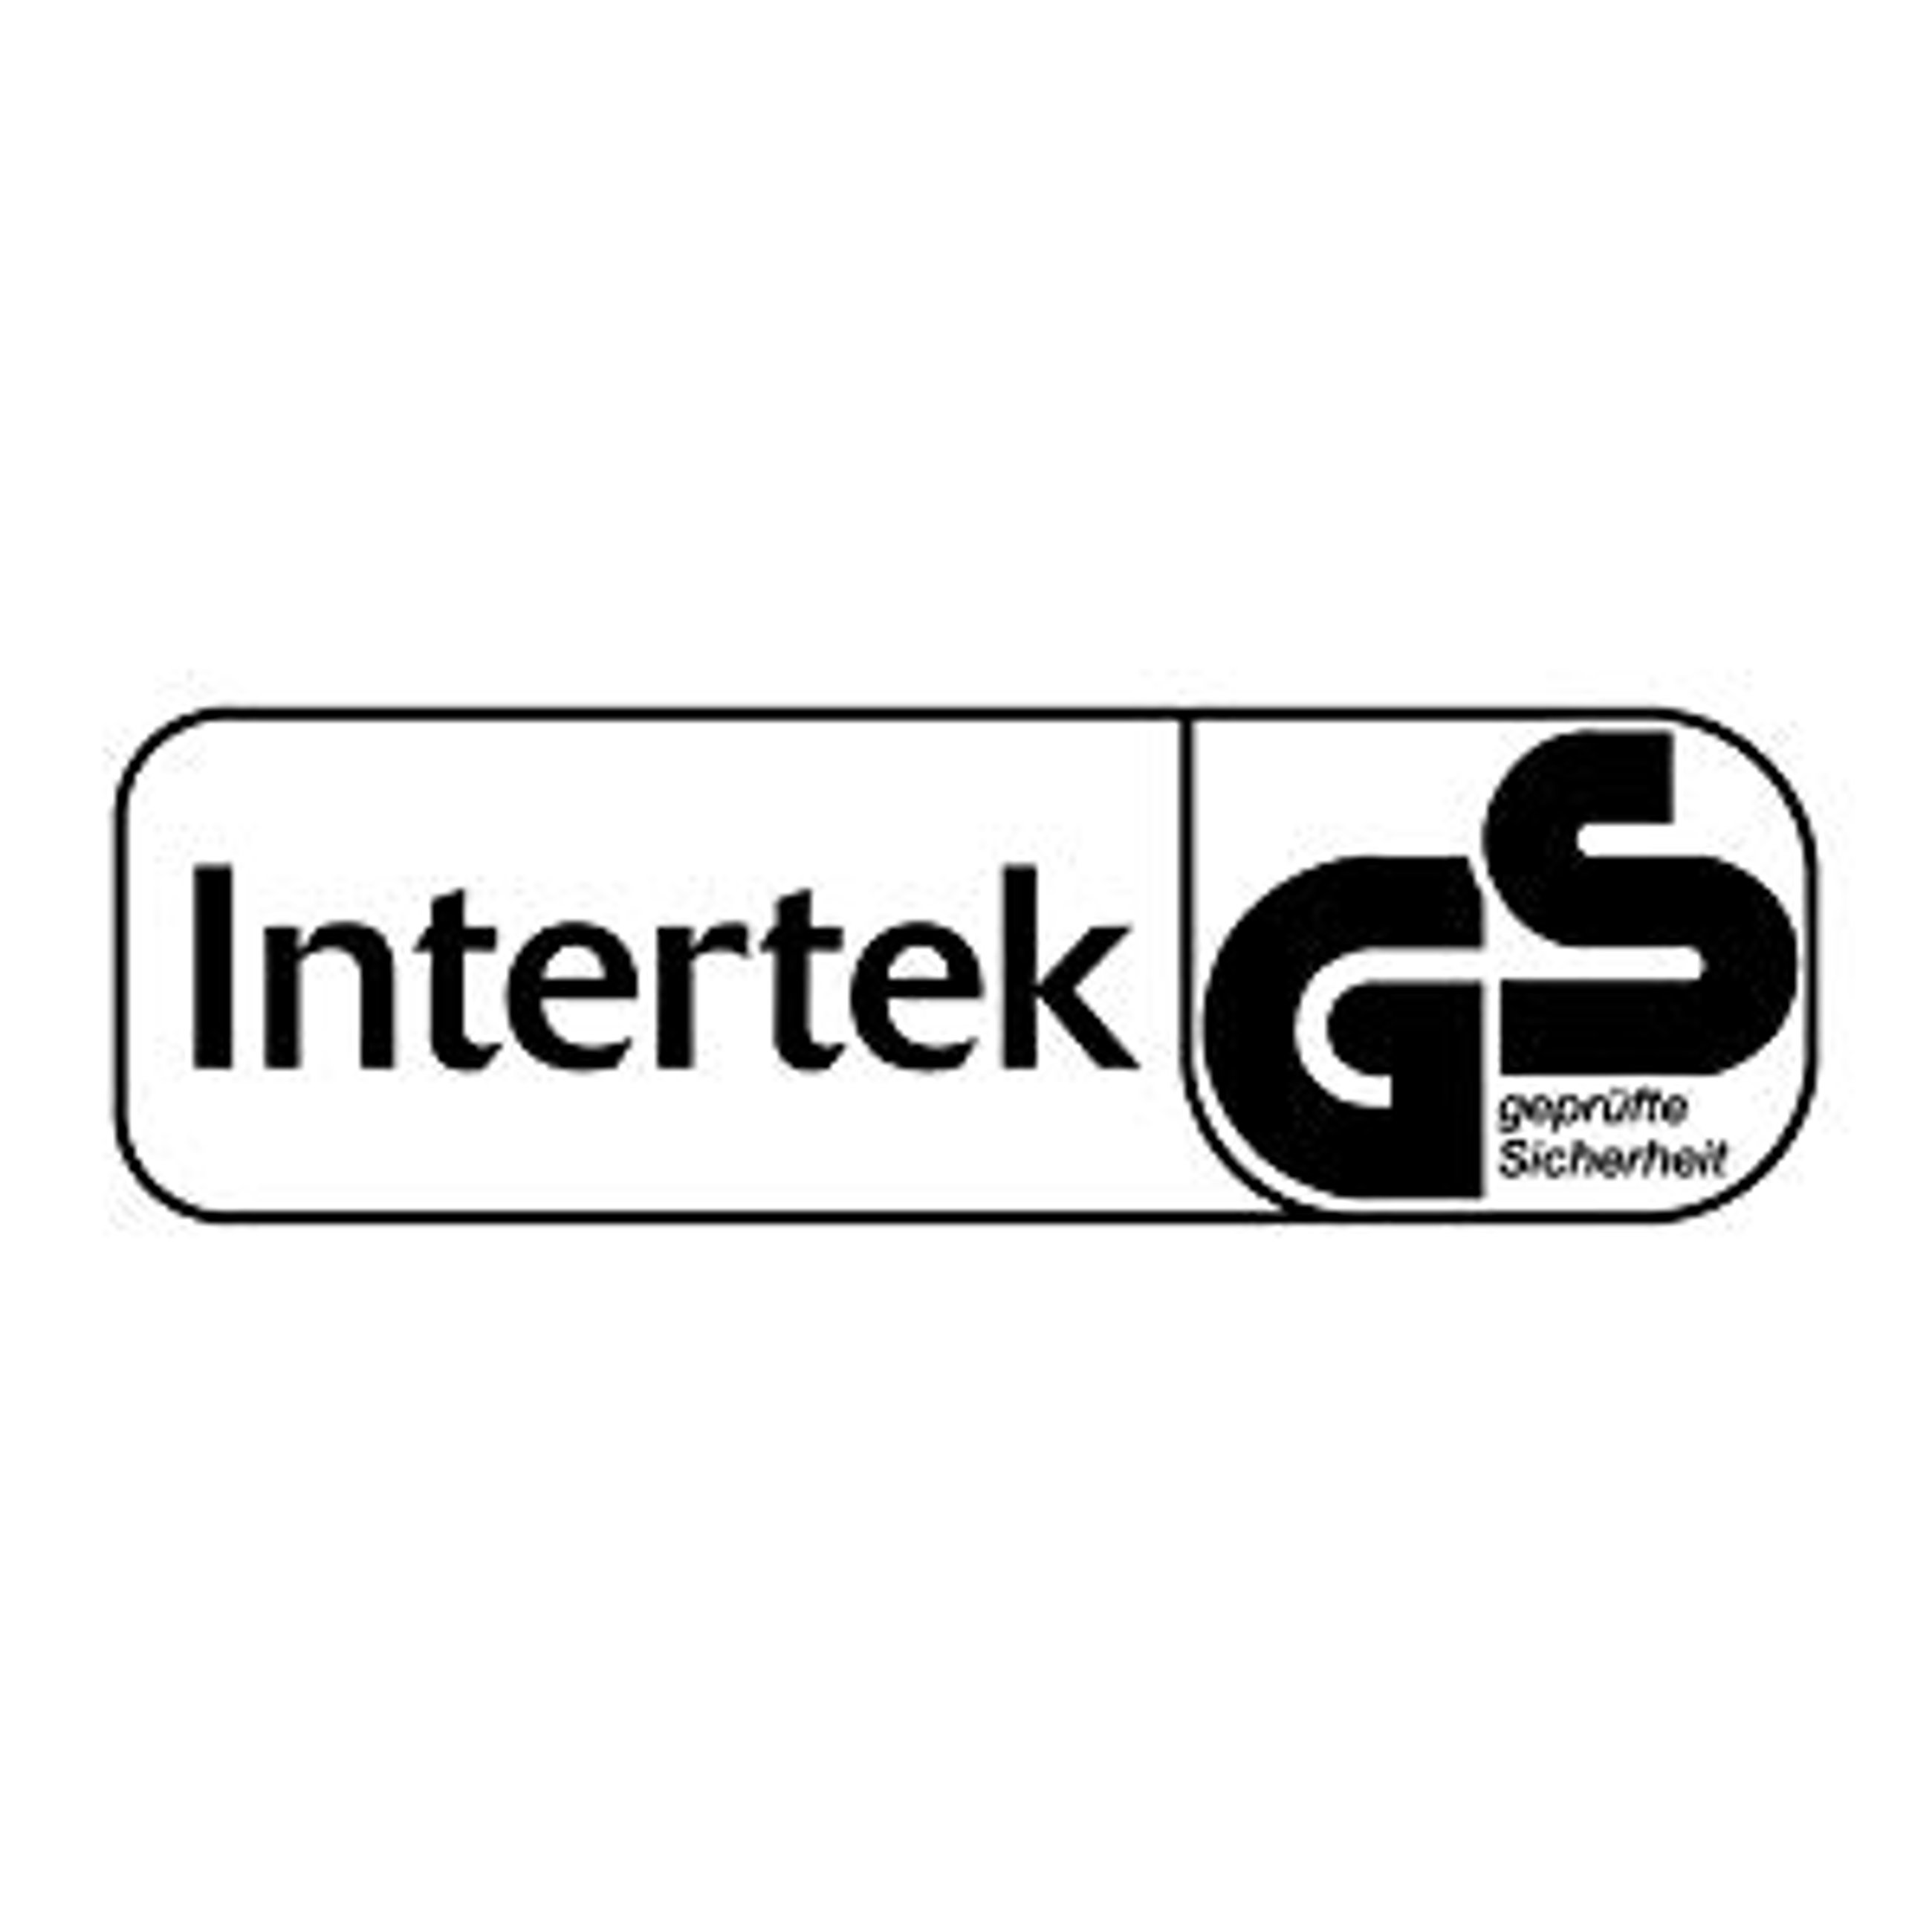 Trampolin-Sicherheitszertifikat Intertek GS